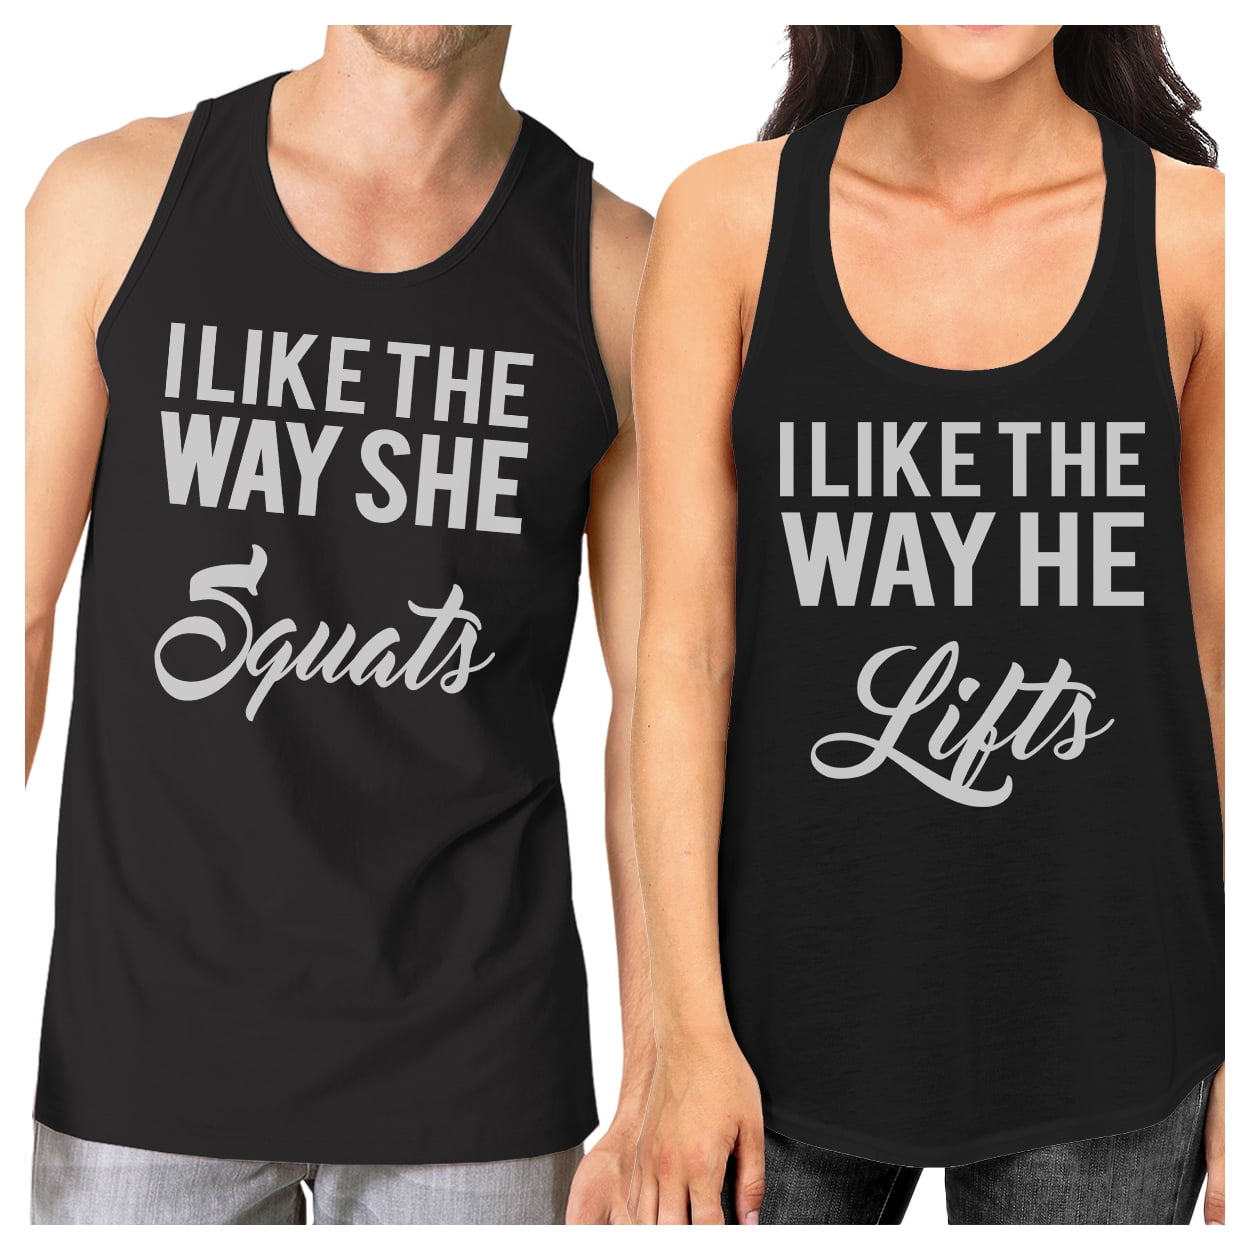 I Like The Way He Lifts Womens Gym Tank. Mens Gym Shirt I Like The Way She Squats Couples Workout Shirts His and Hers Workout Shirts